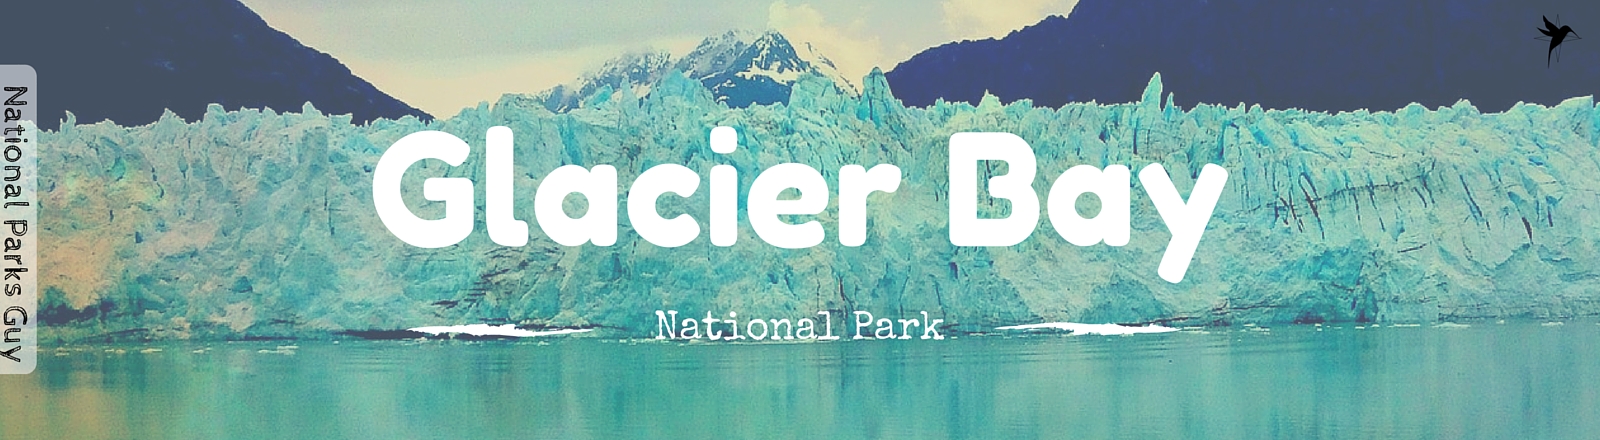 Glacier Bay National Park, USA, National Parks Guy, Stories, Tales, Adventures, Wildlife